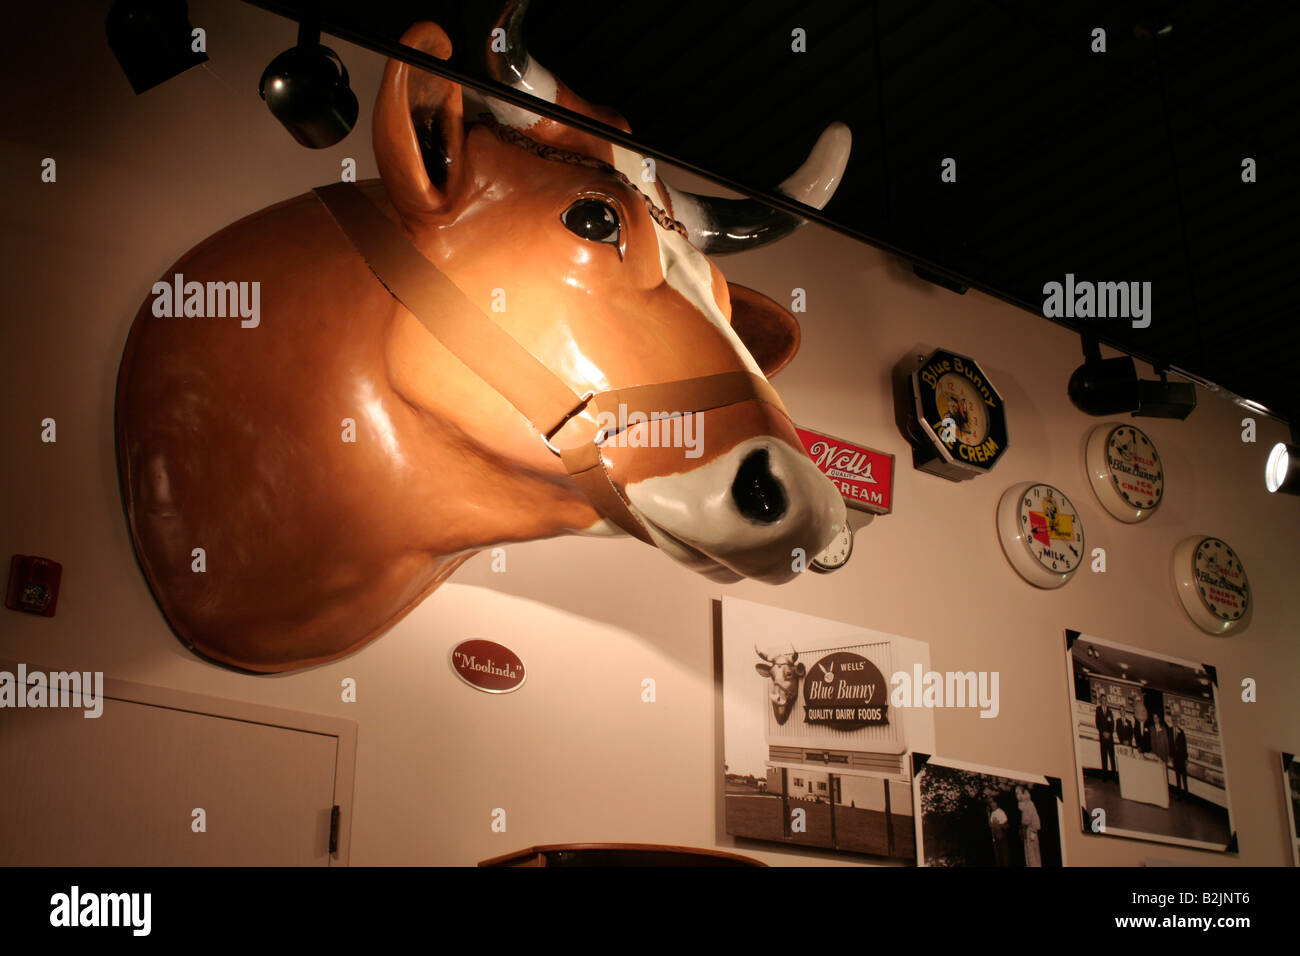 Wells dairy cow Moolinda from billboard Blue Bunny museum Le Mars Iowa Stock Photo